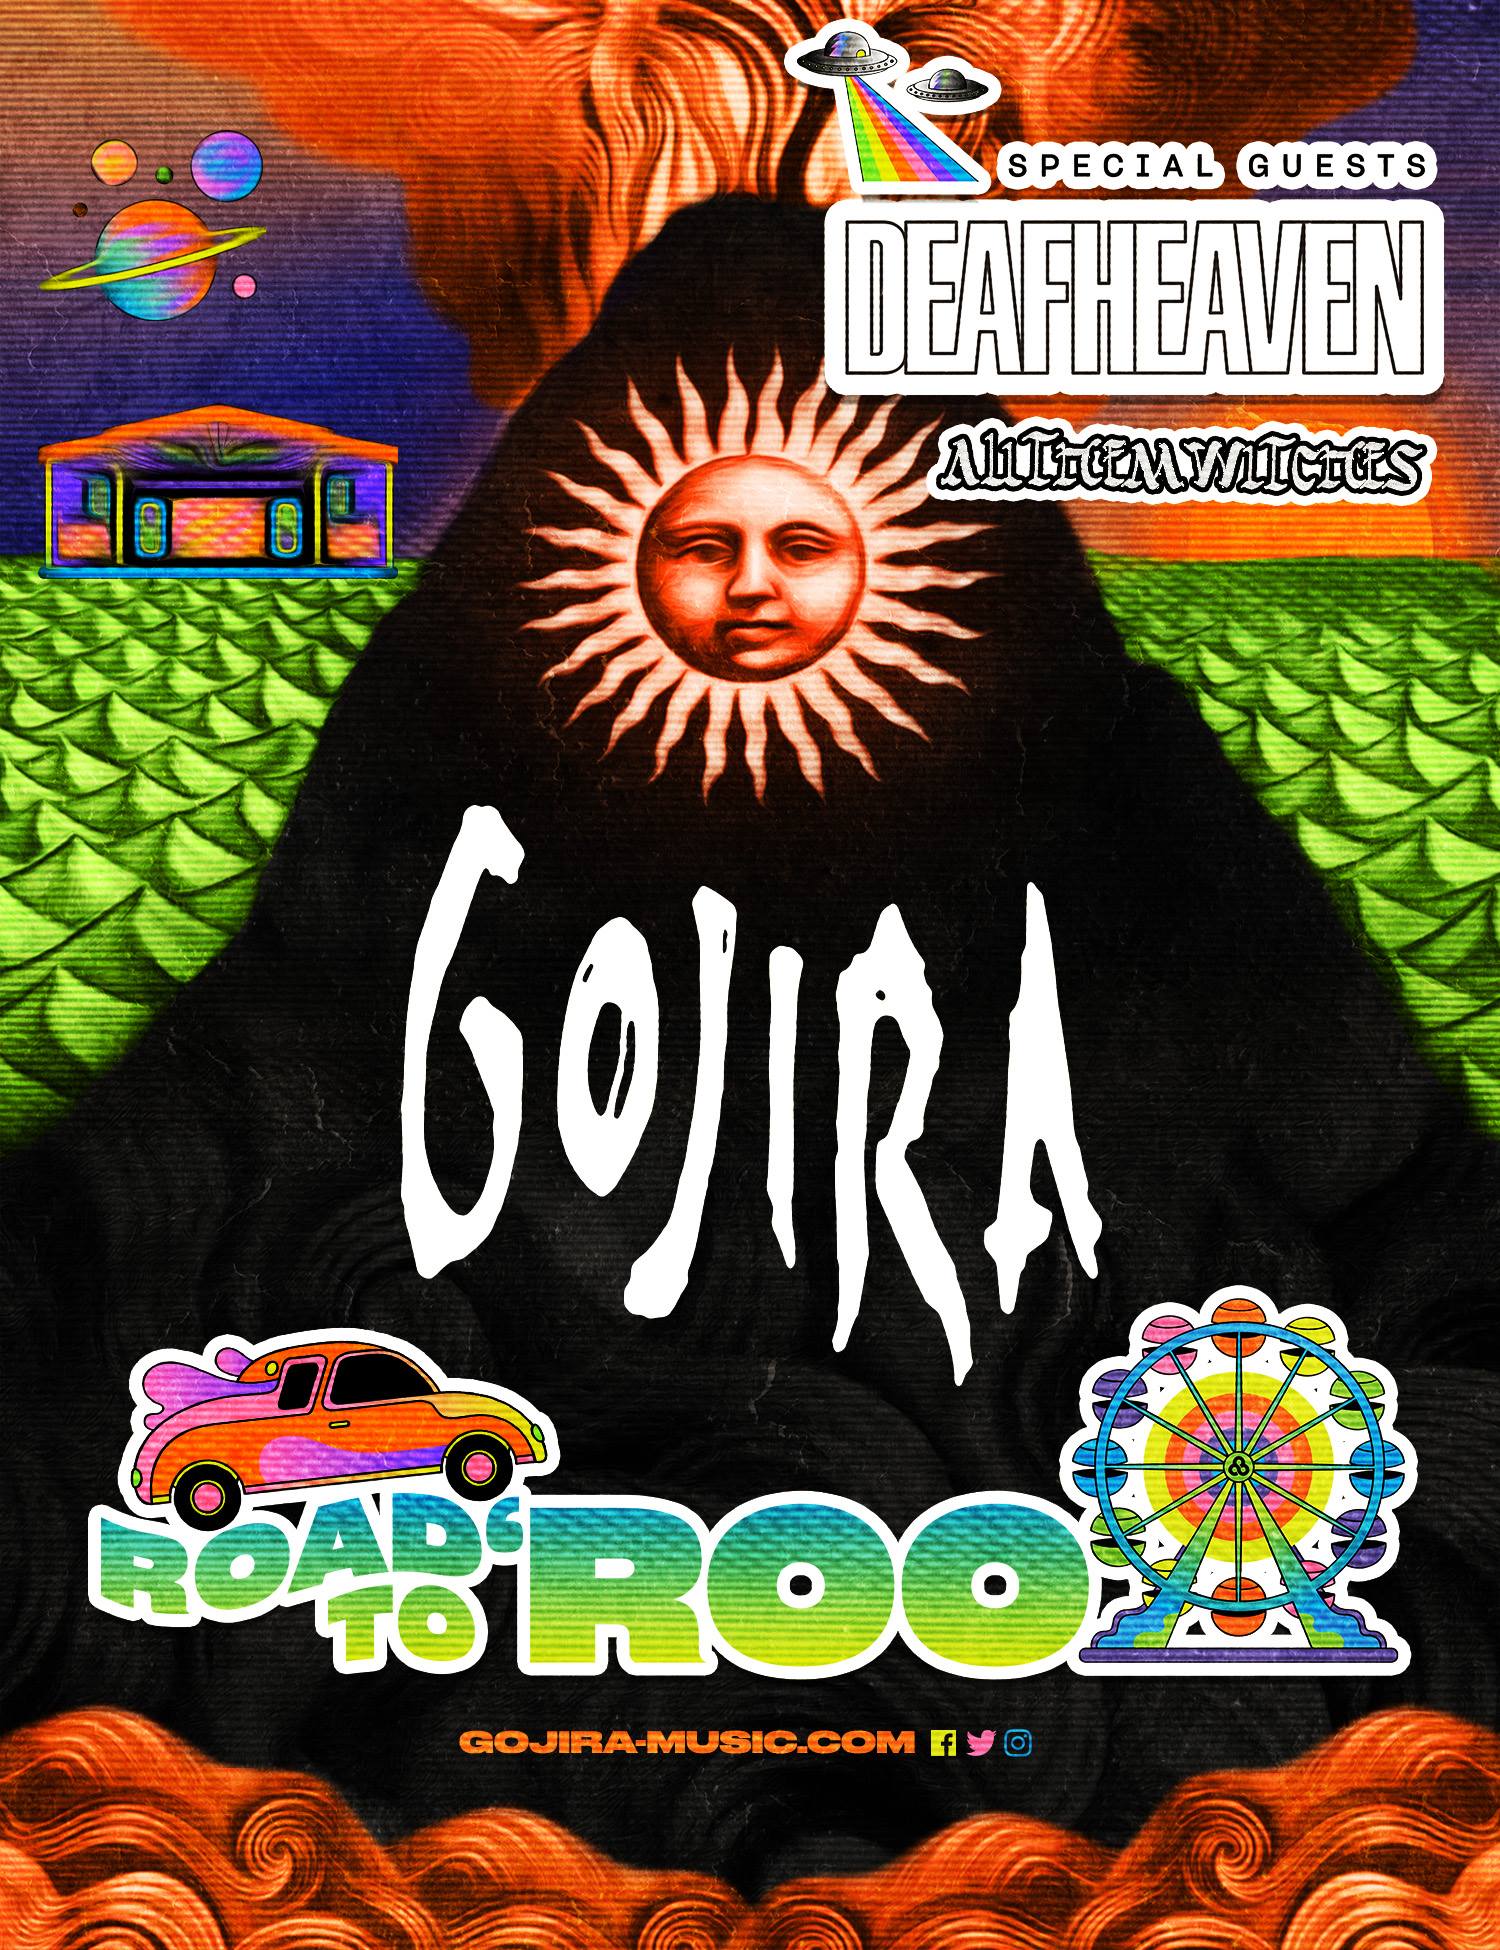 Gojira announce mini ‘Road to Roo’ tour w/ Deafheaven